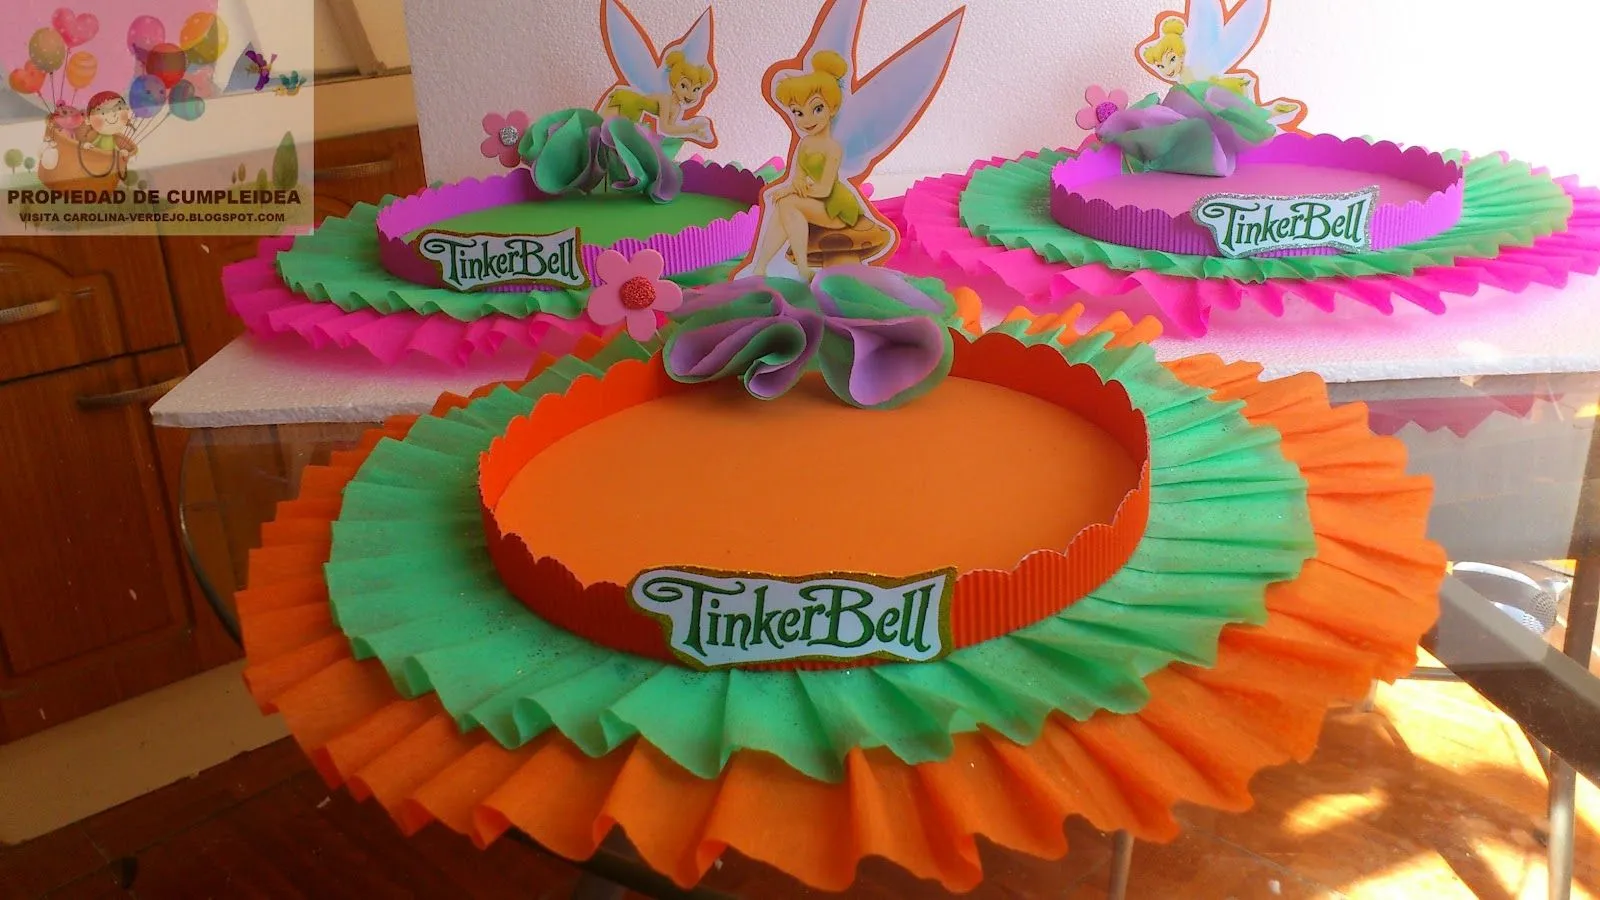 Tinkerbell adornos para cumpleaños - Imagui